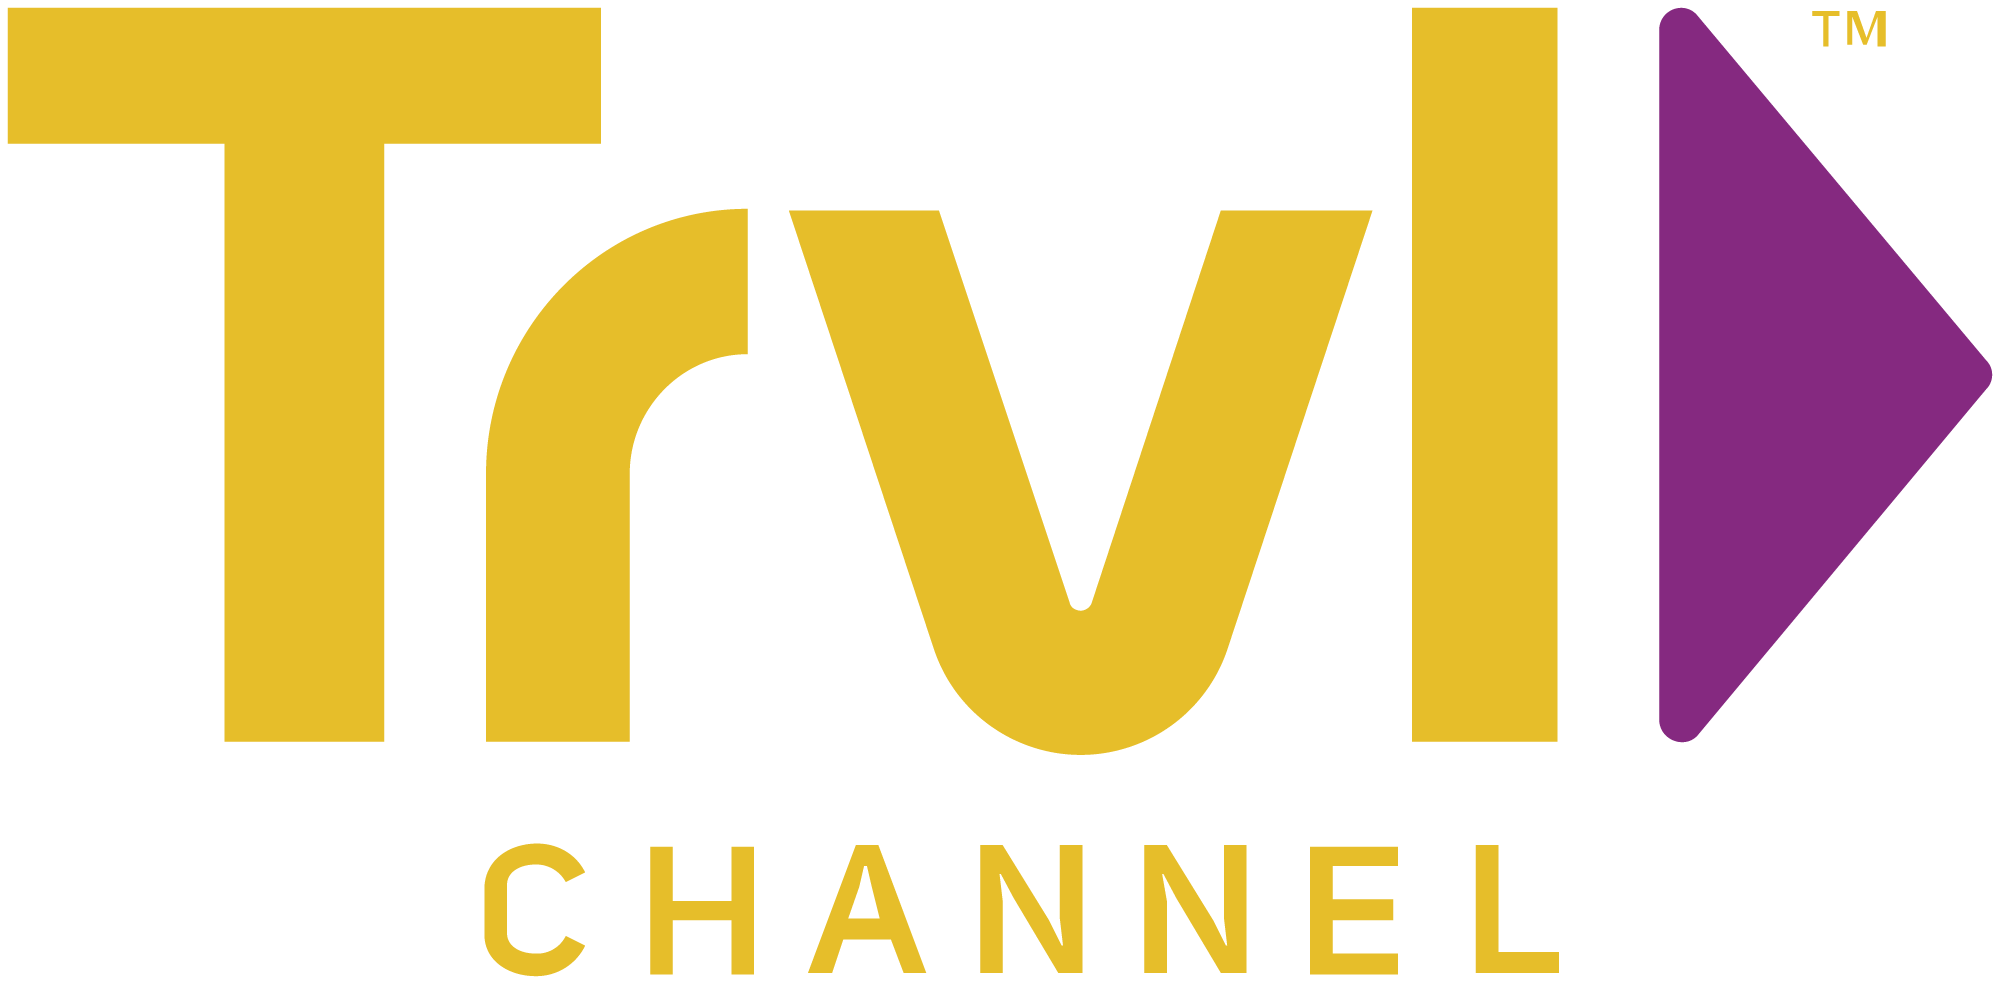 Orange Channel Logo - Brand New: New Logo for Travel Channel